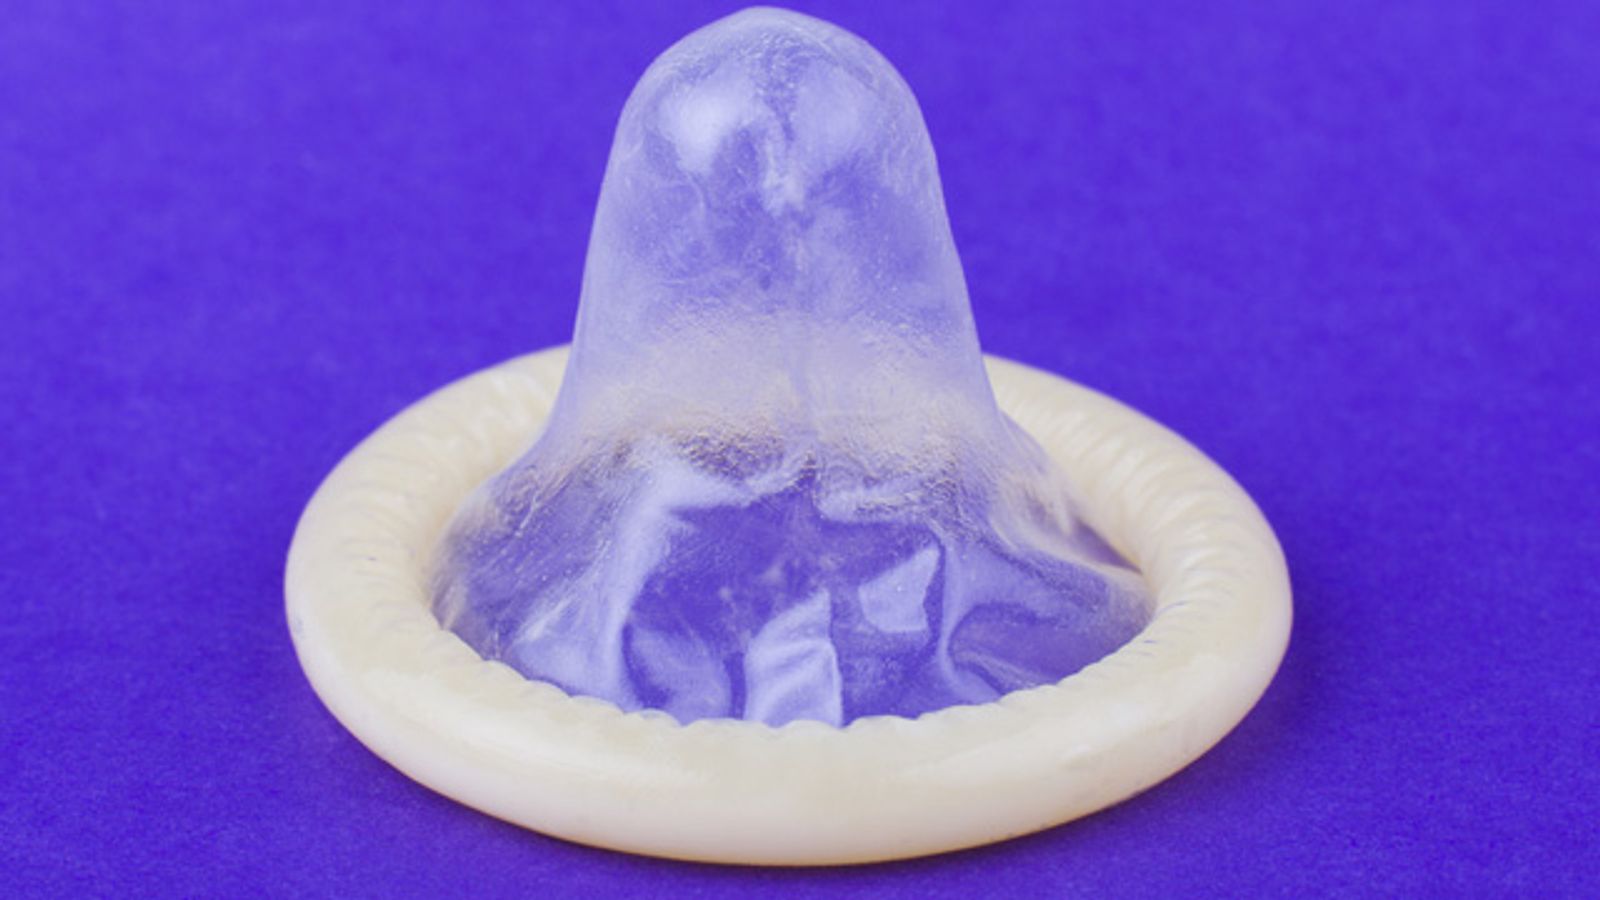 Details of Simi Valley Mandatory Condom Law Emerge